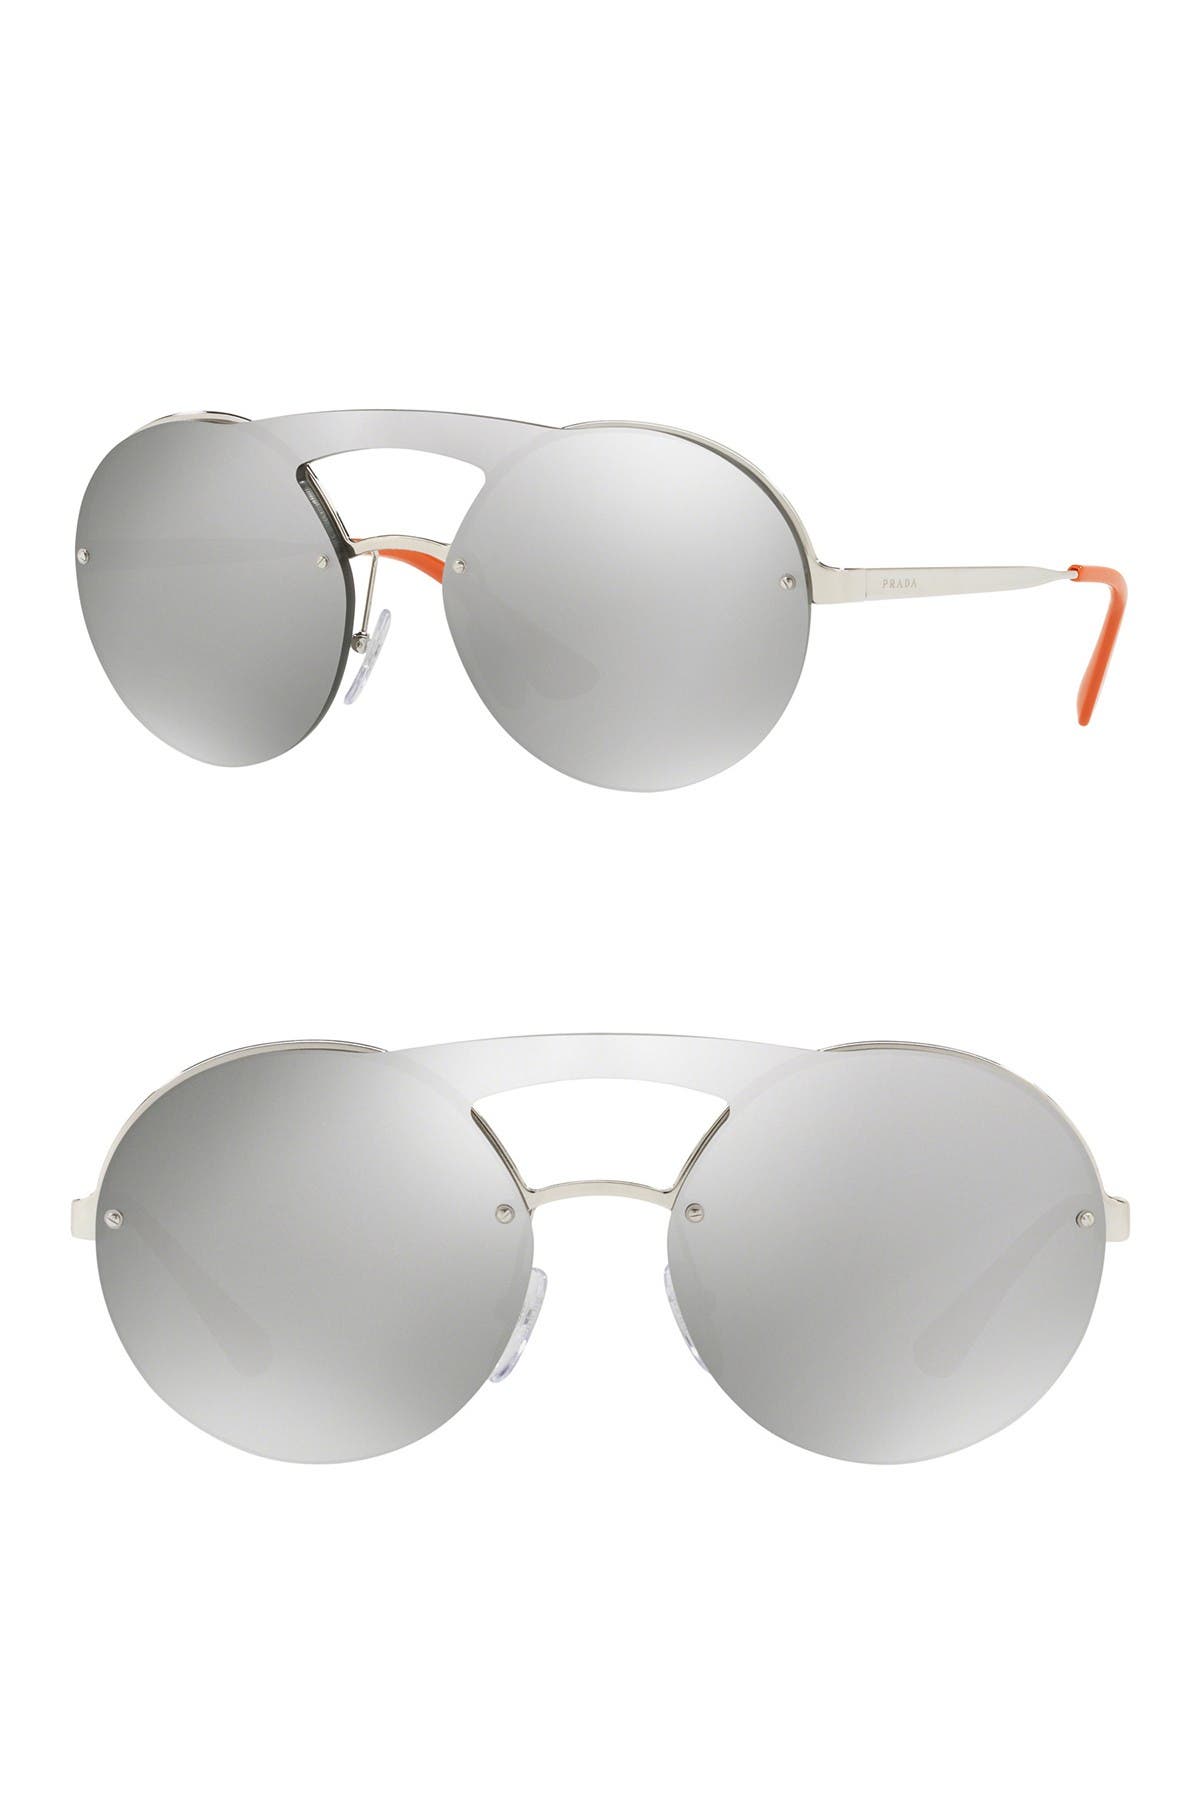 Prada | 36mm Round Sunglasses 